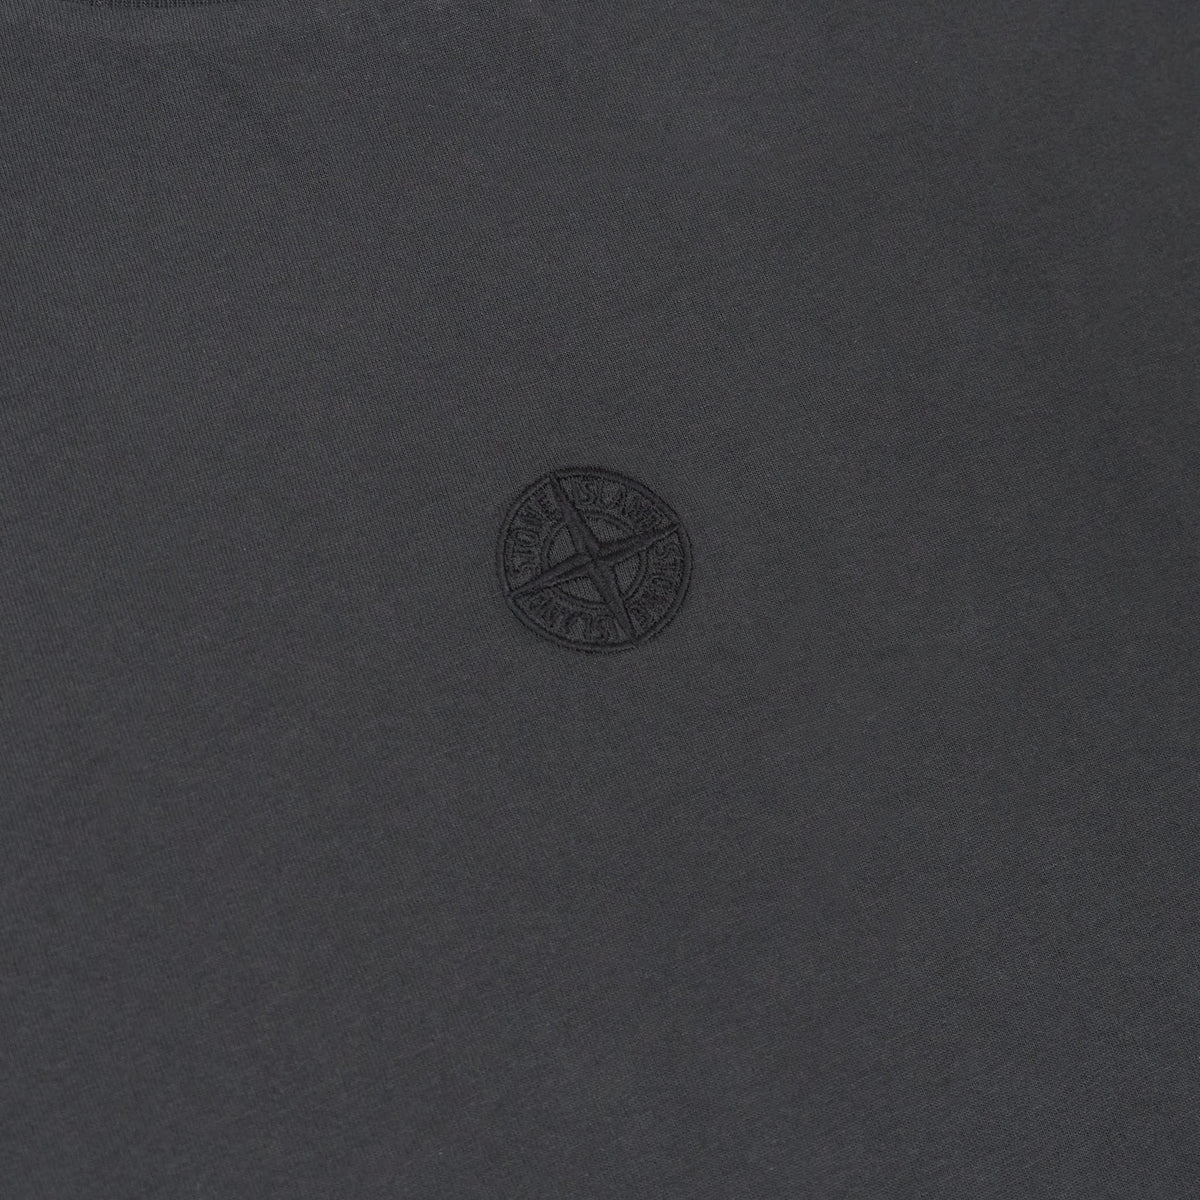 Stone Island Crew Neck Organic Cotton  Embroidered  Logo T-Shirt